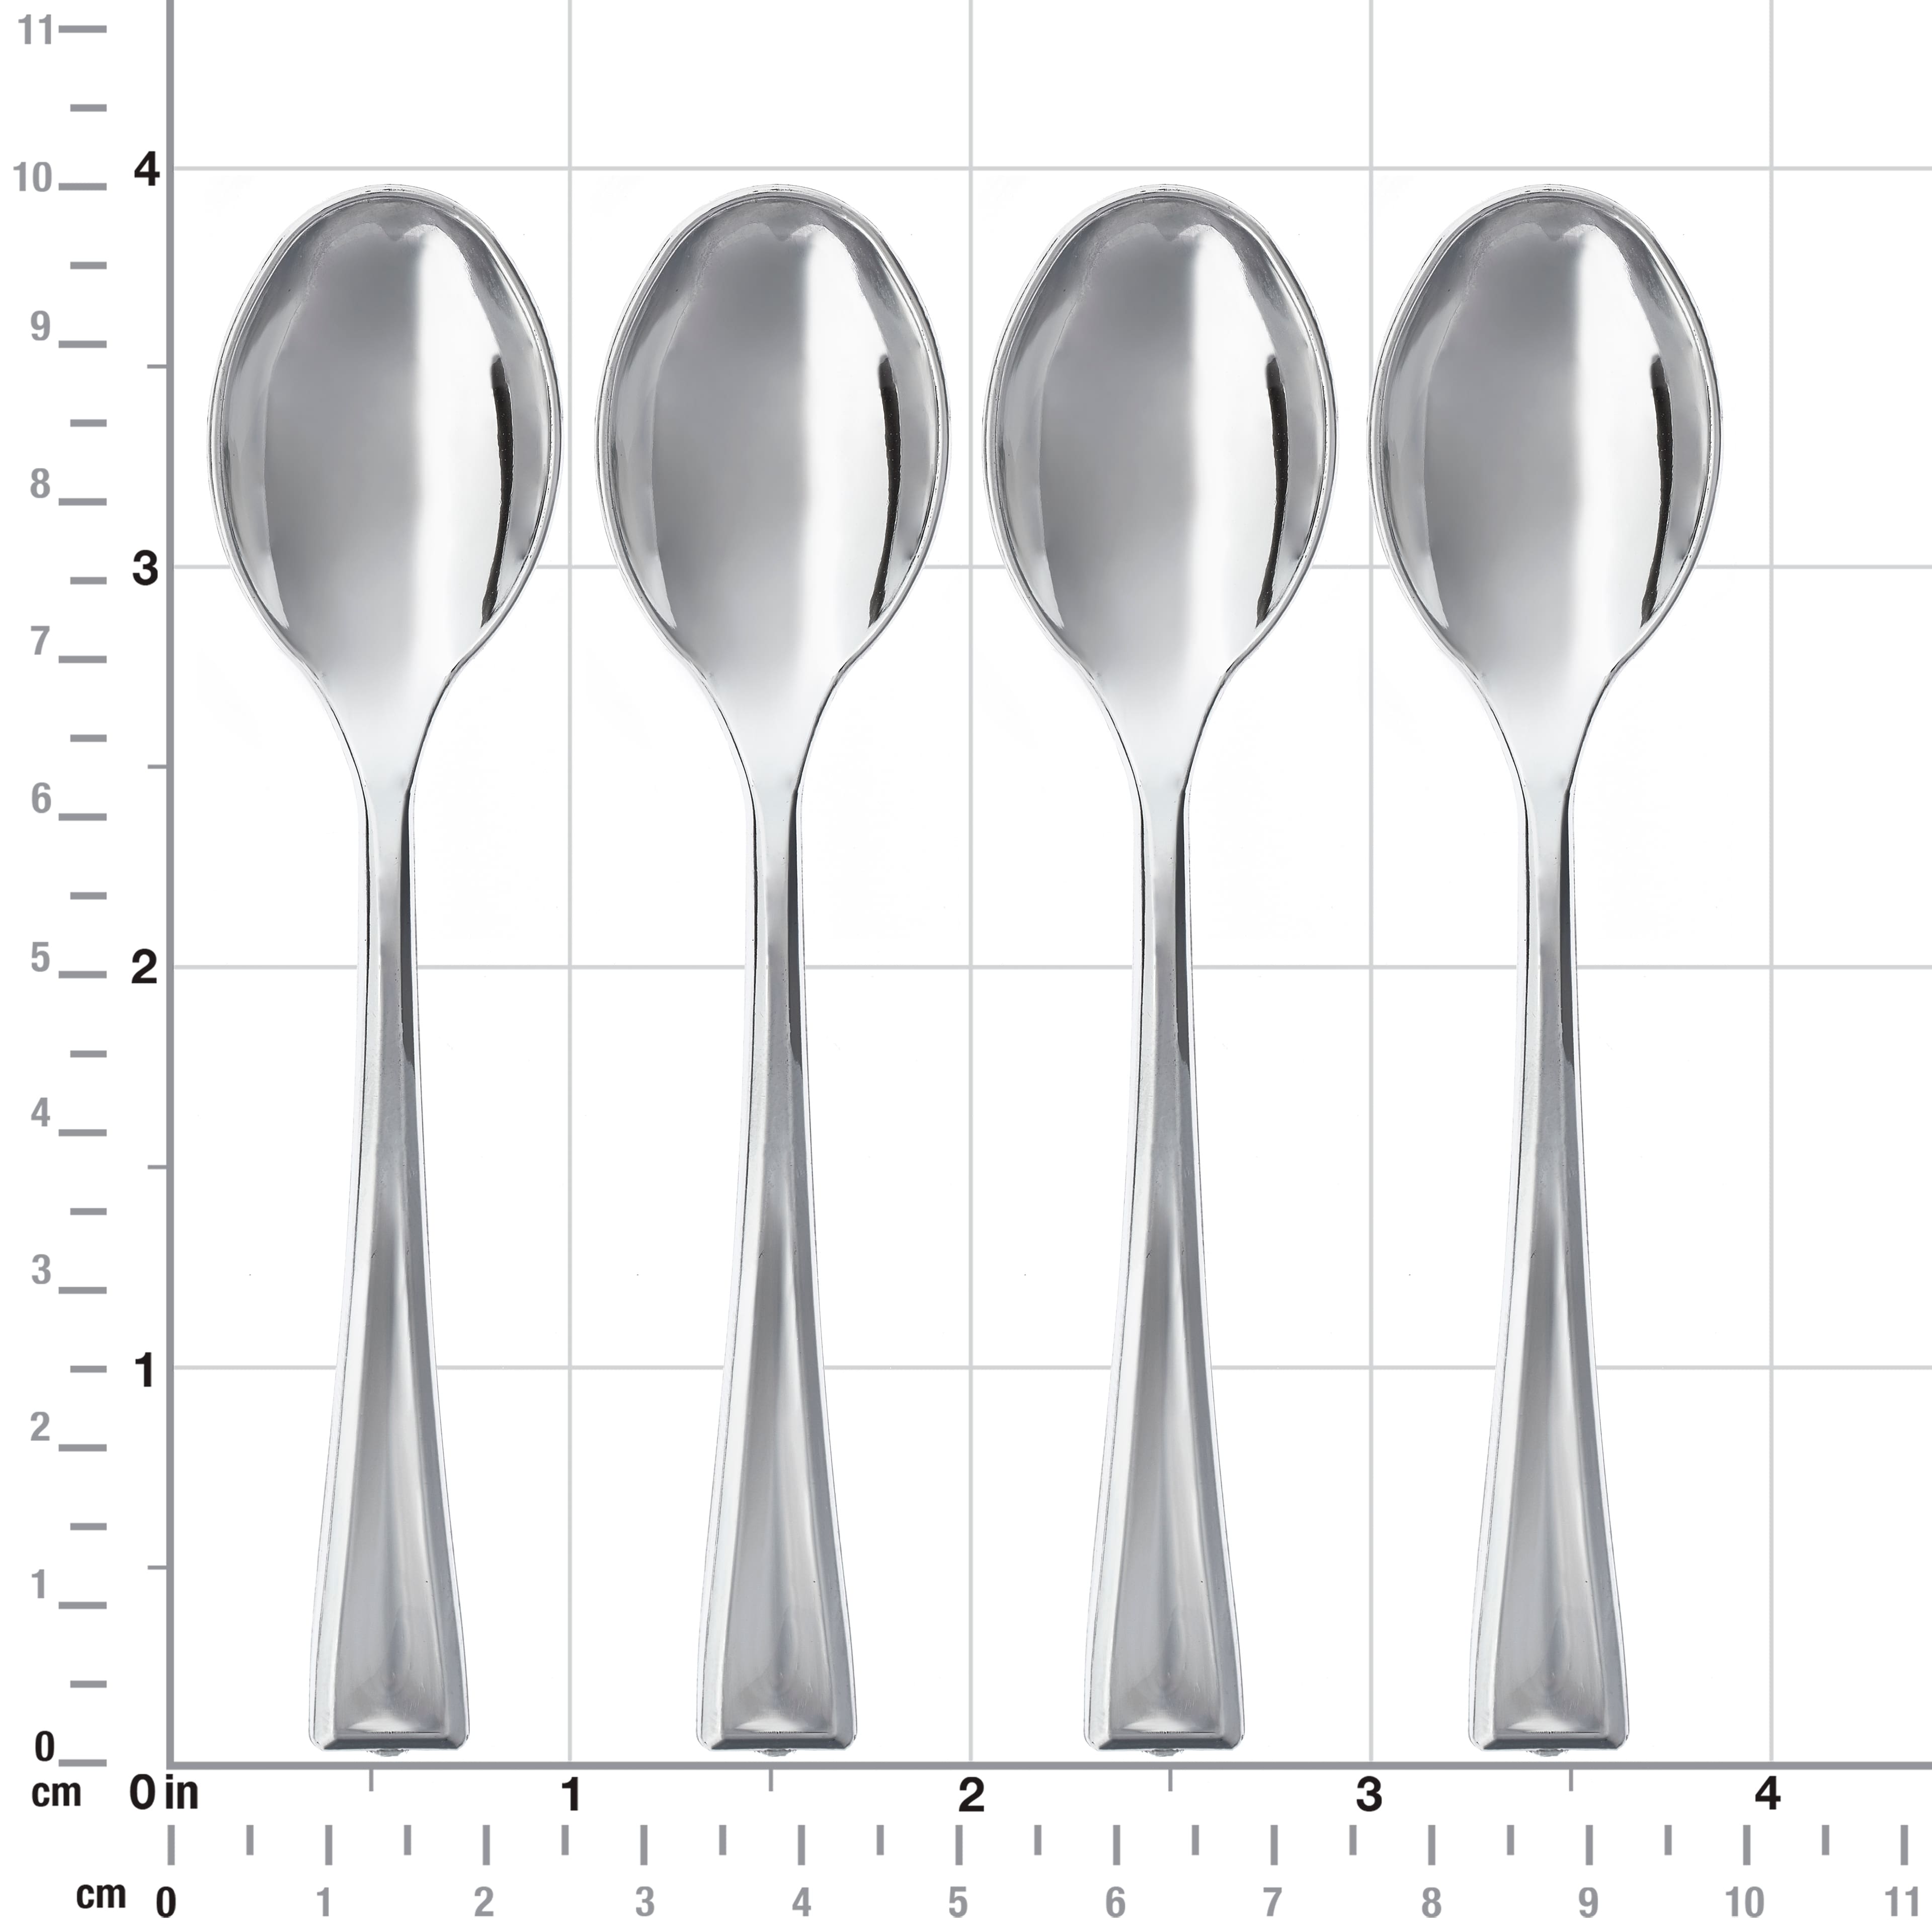 Silver Plastic Mini Spoons by Celebrate It&#x2122;, 24ct.